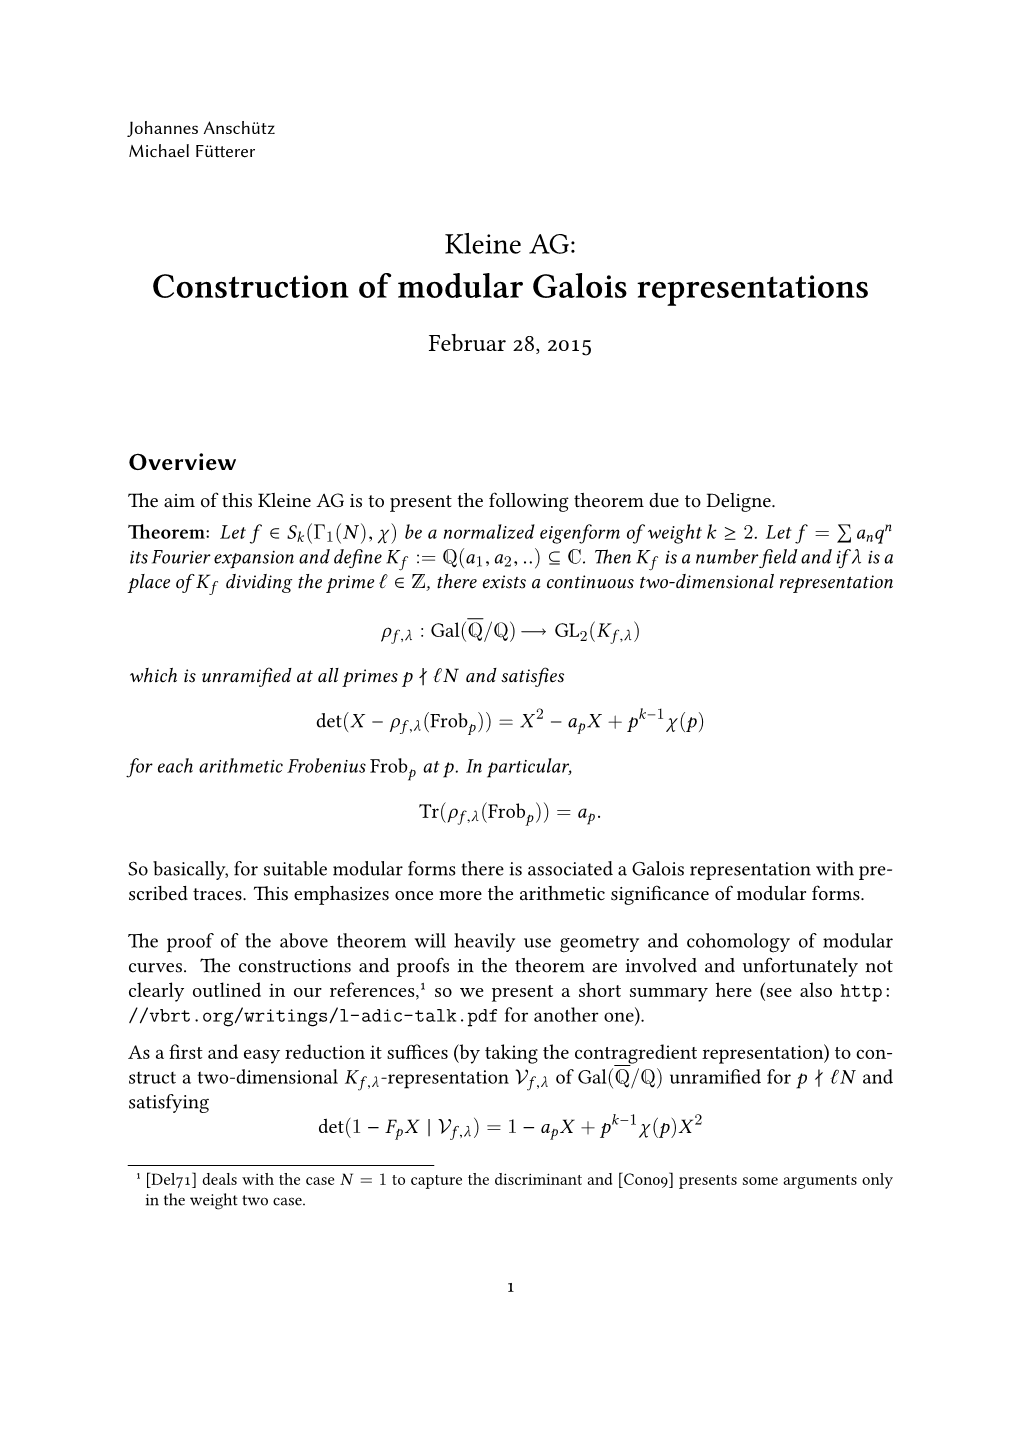 Construction of Modular Galois Representations